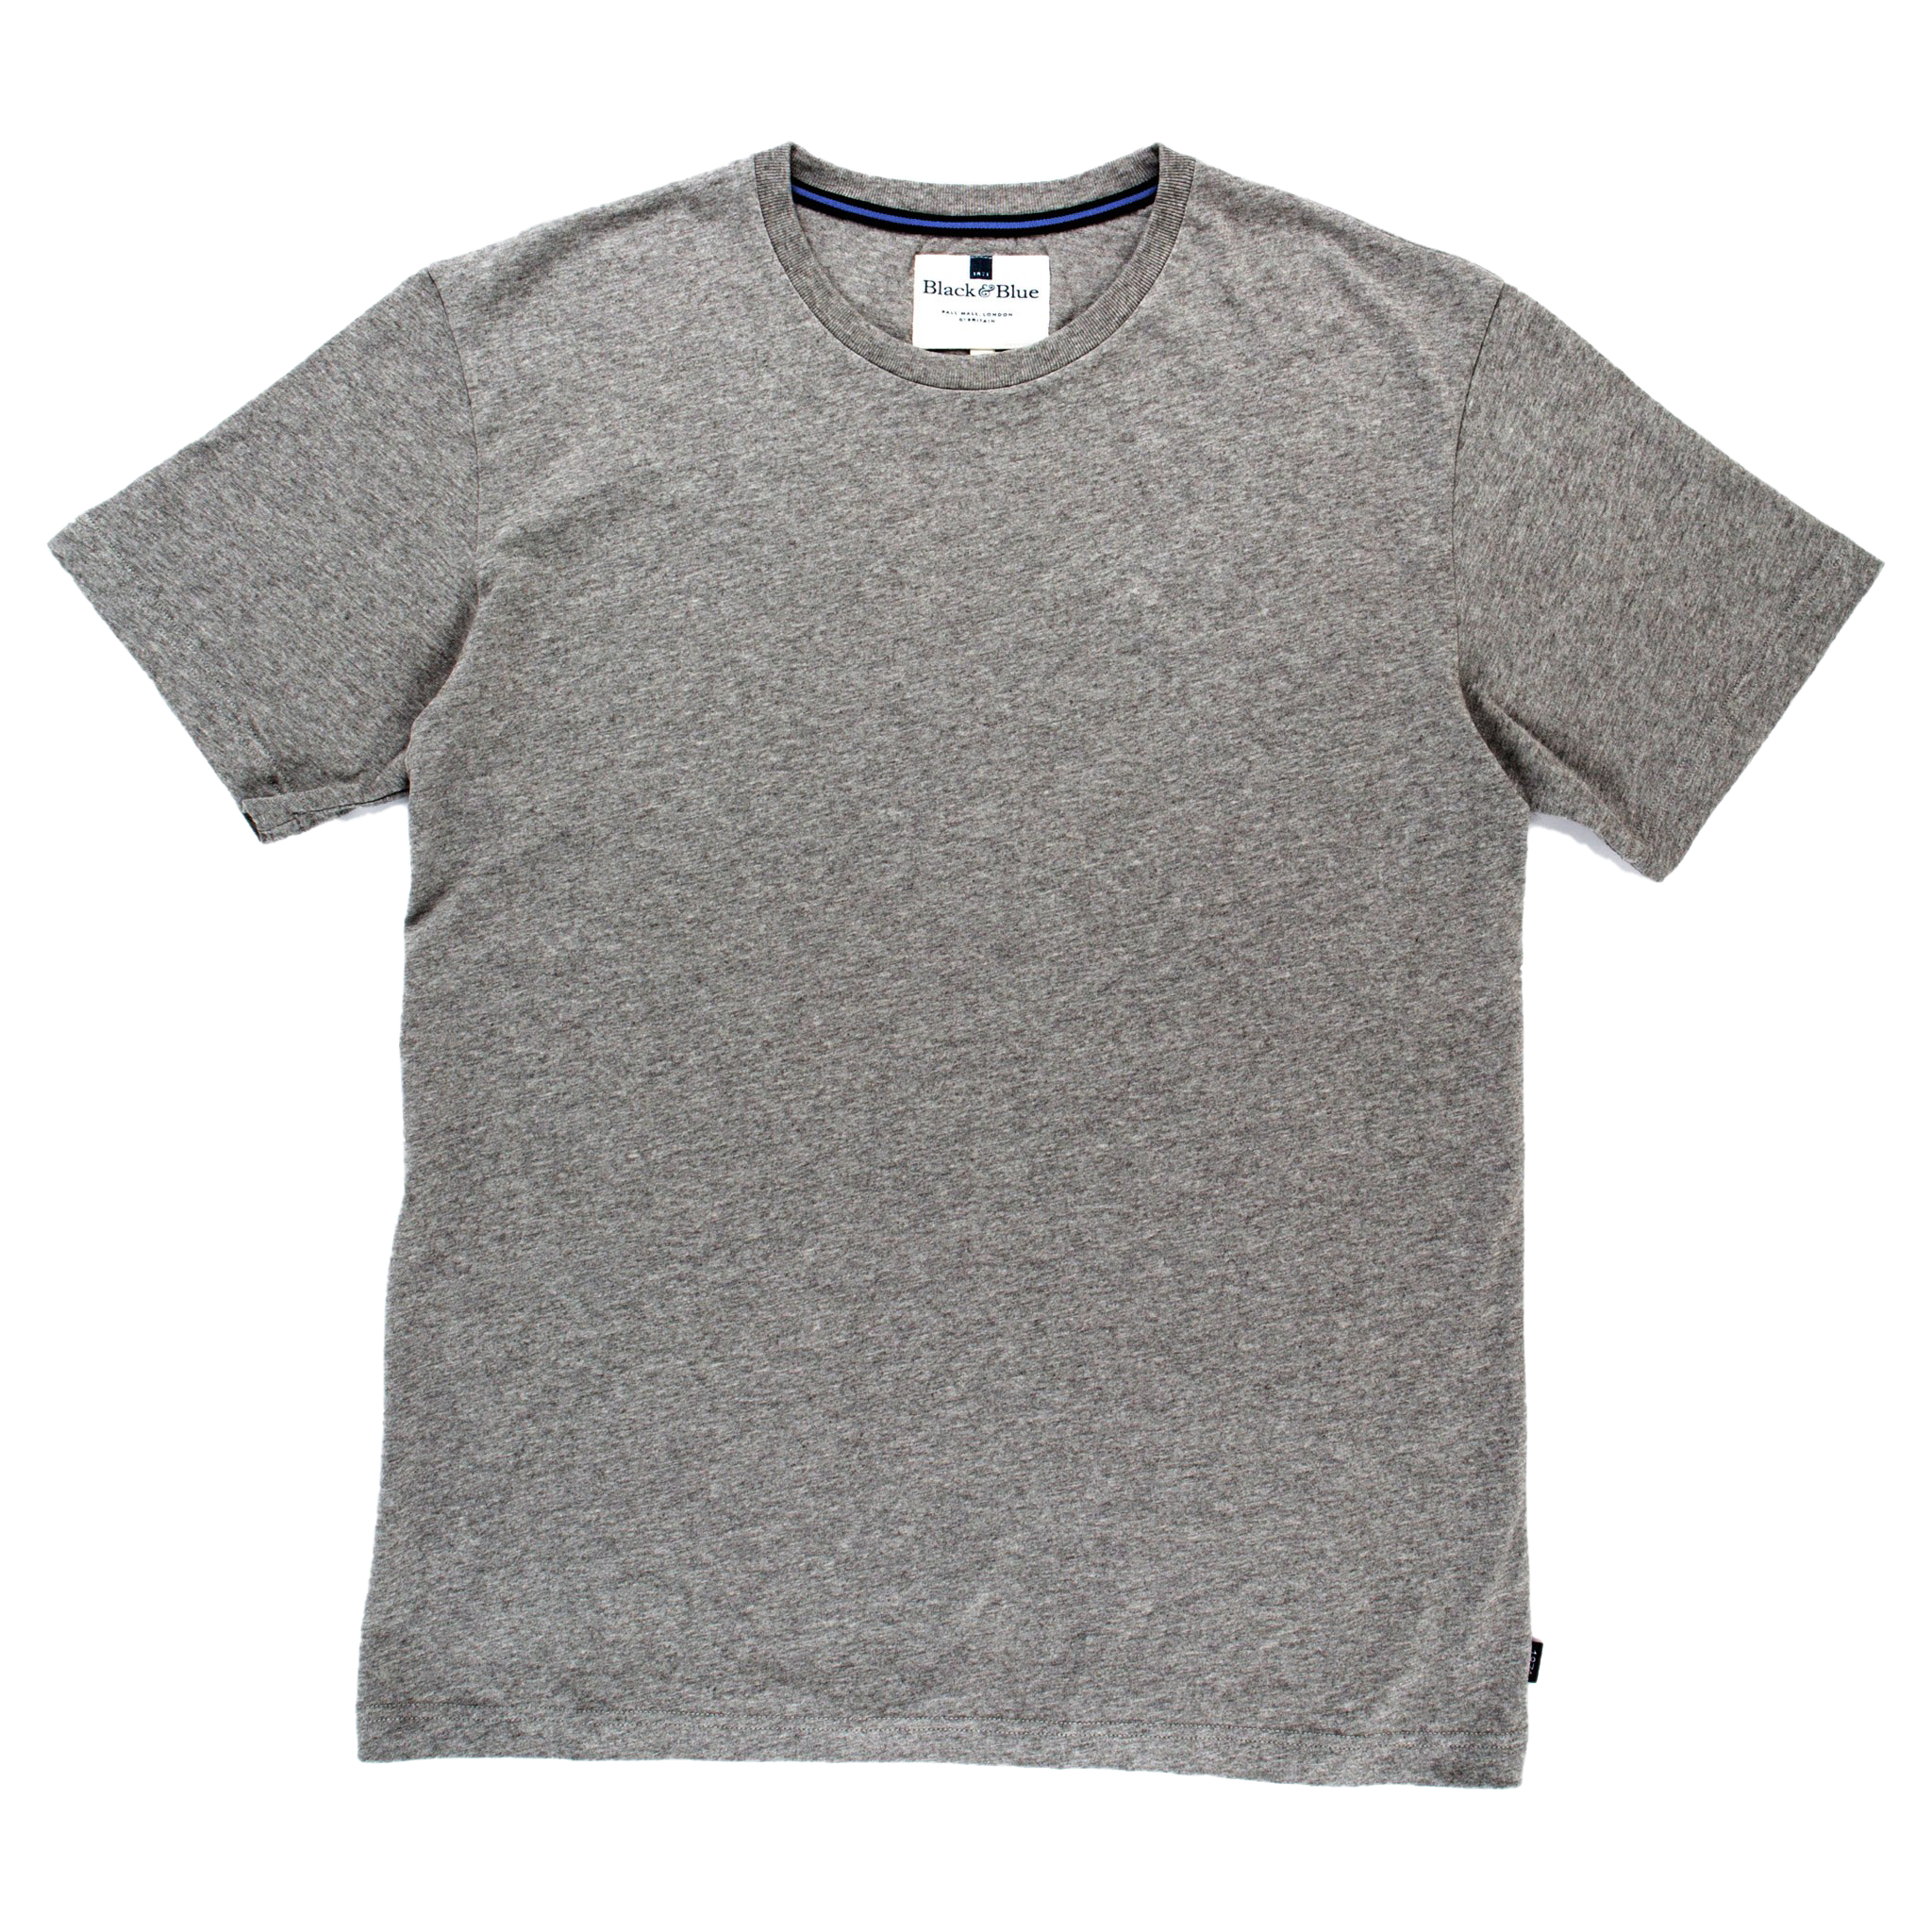 Einfaches graues T-Shirt PNG-Bild